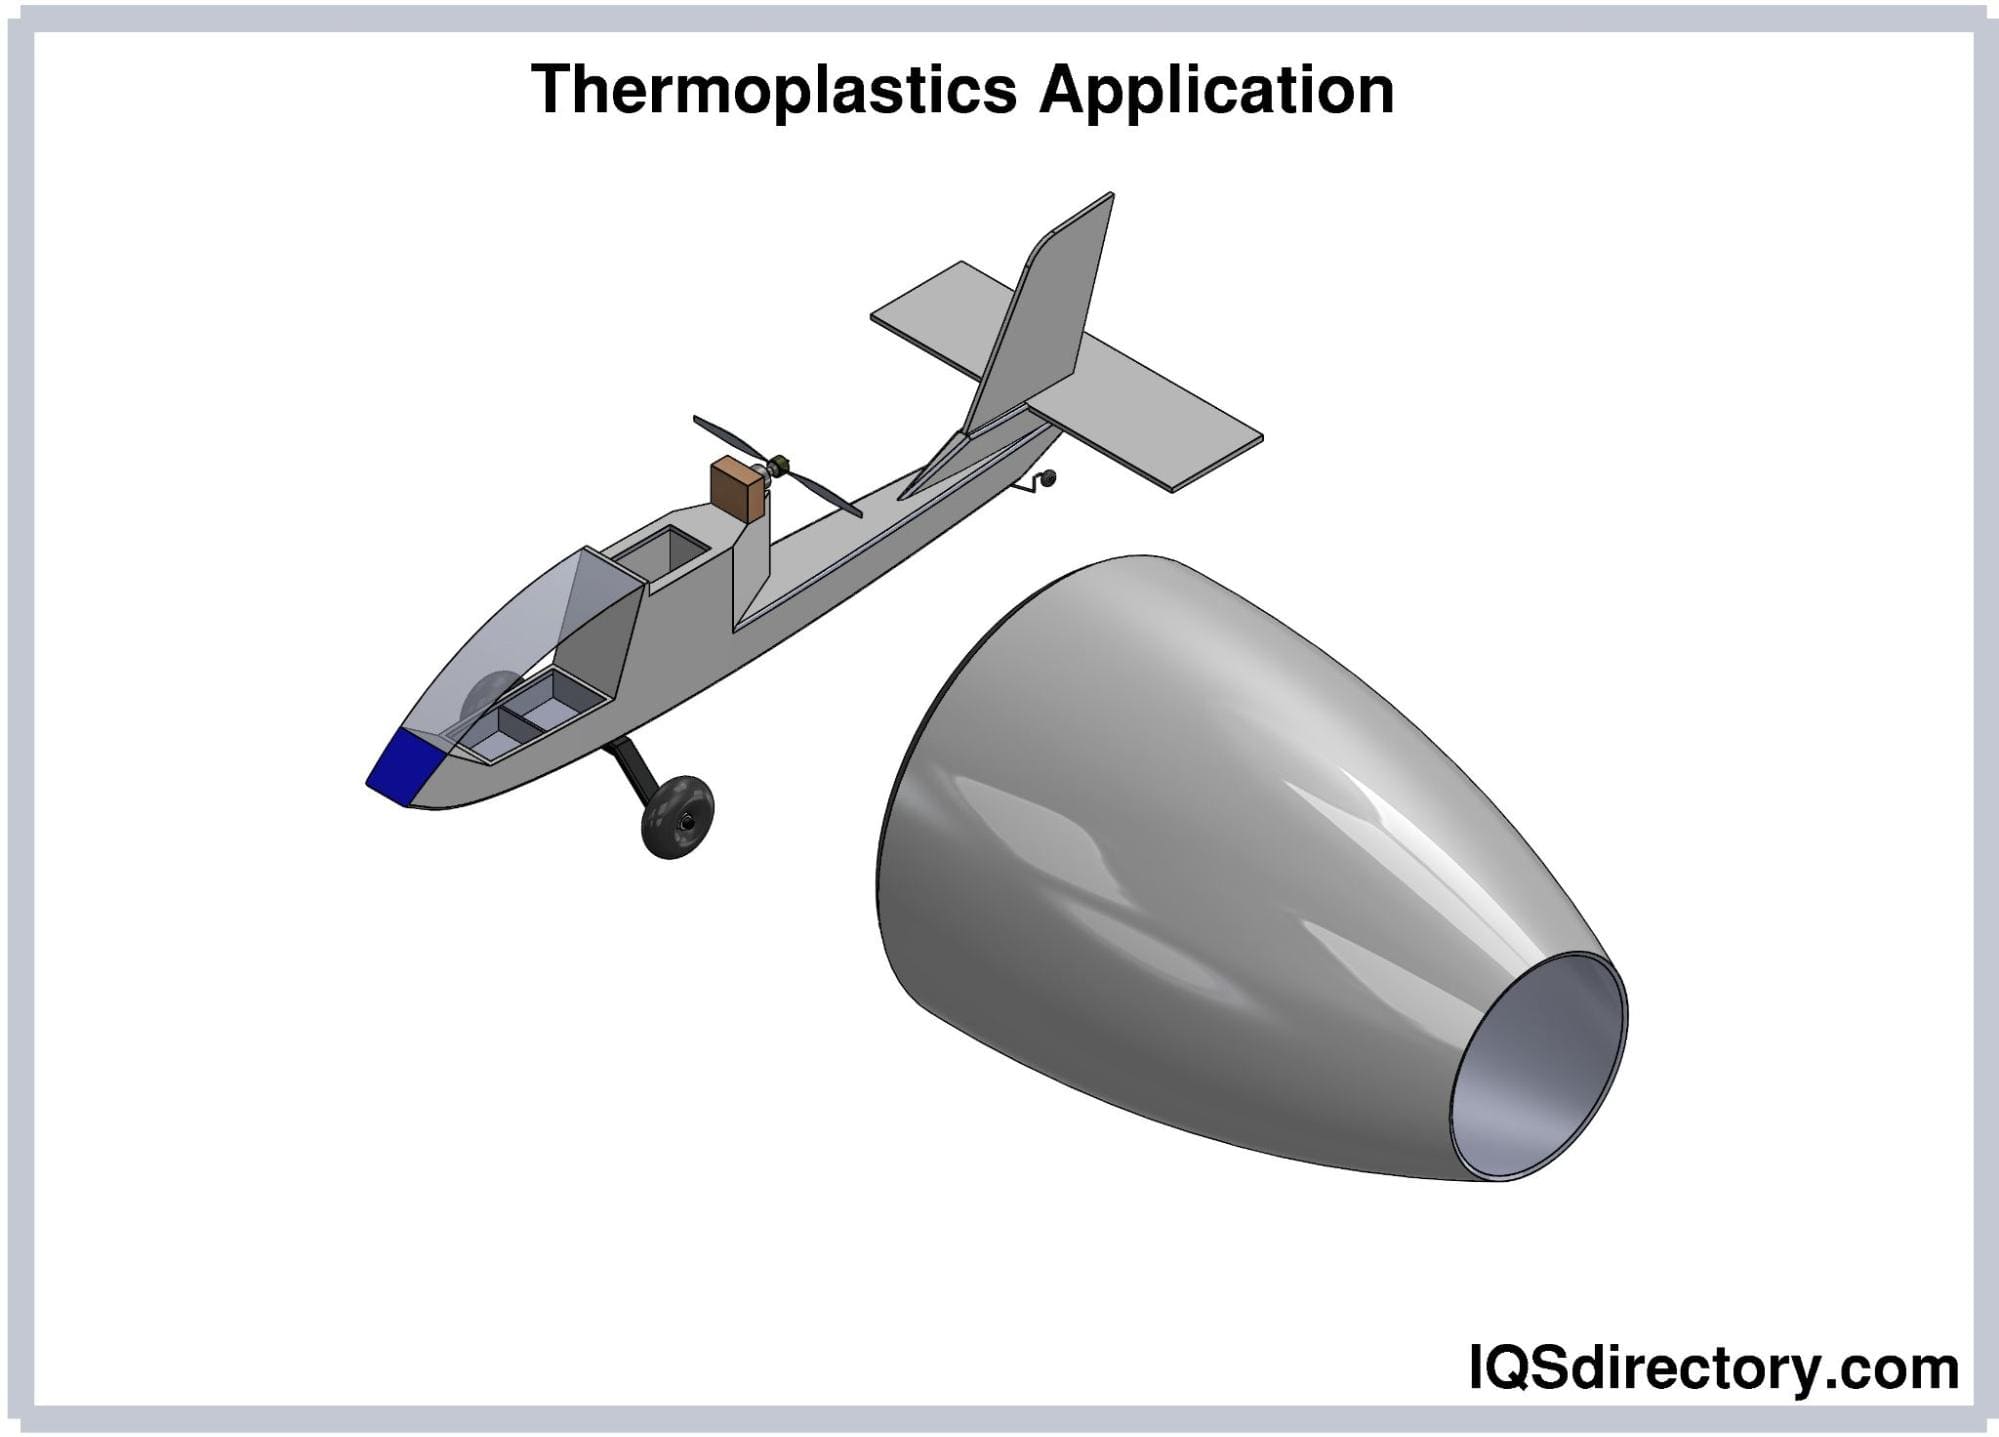 Thermoplastics Application